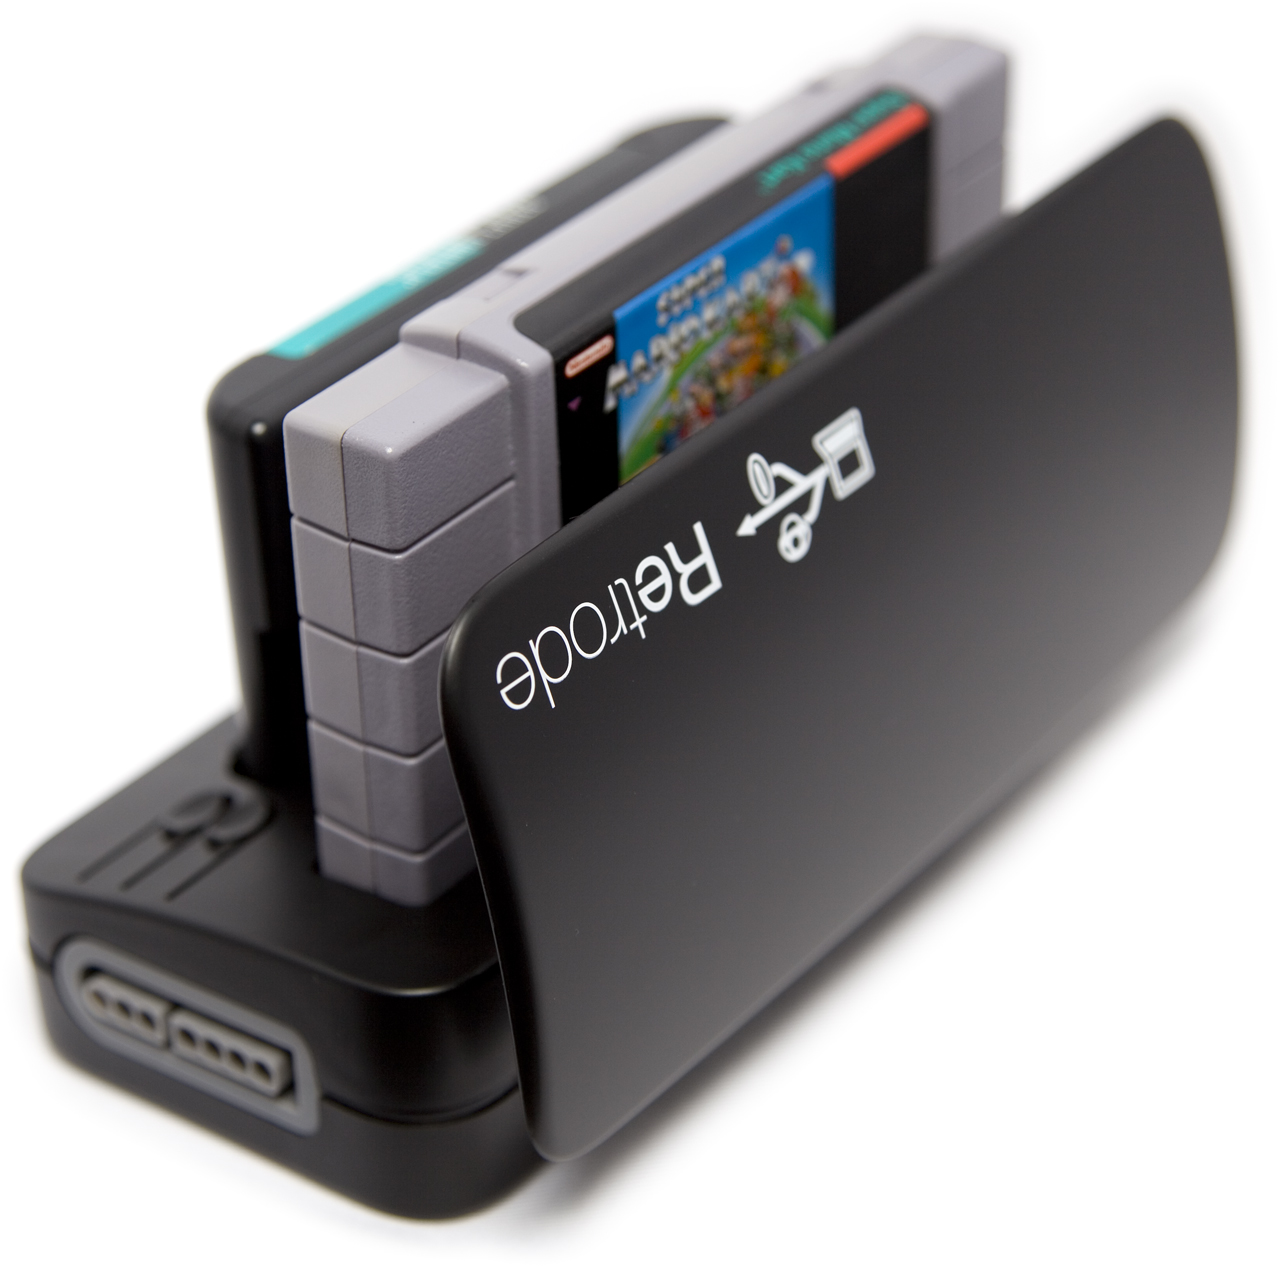 File:Nintendo-Switch-Cartridge.jpg - Wikipedia